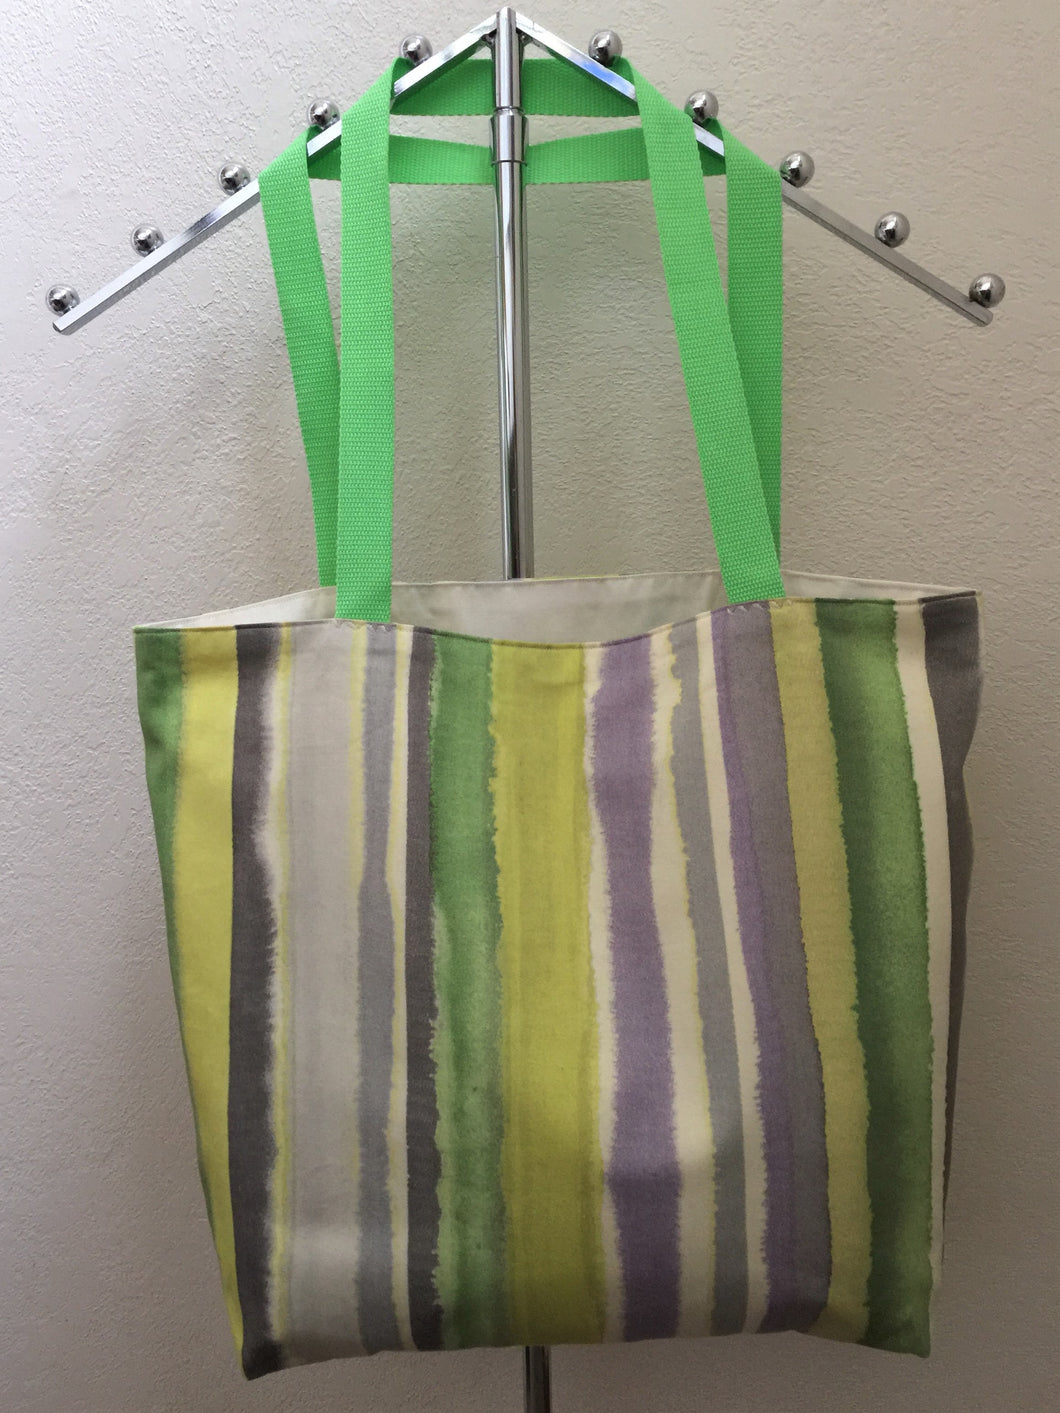 Artistic Streak – Green, chartreuse, lavender, grey, and cream stripes